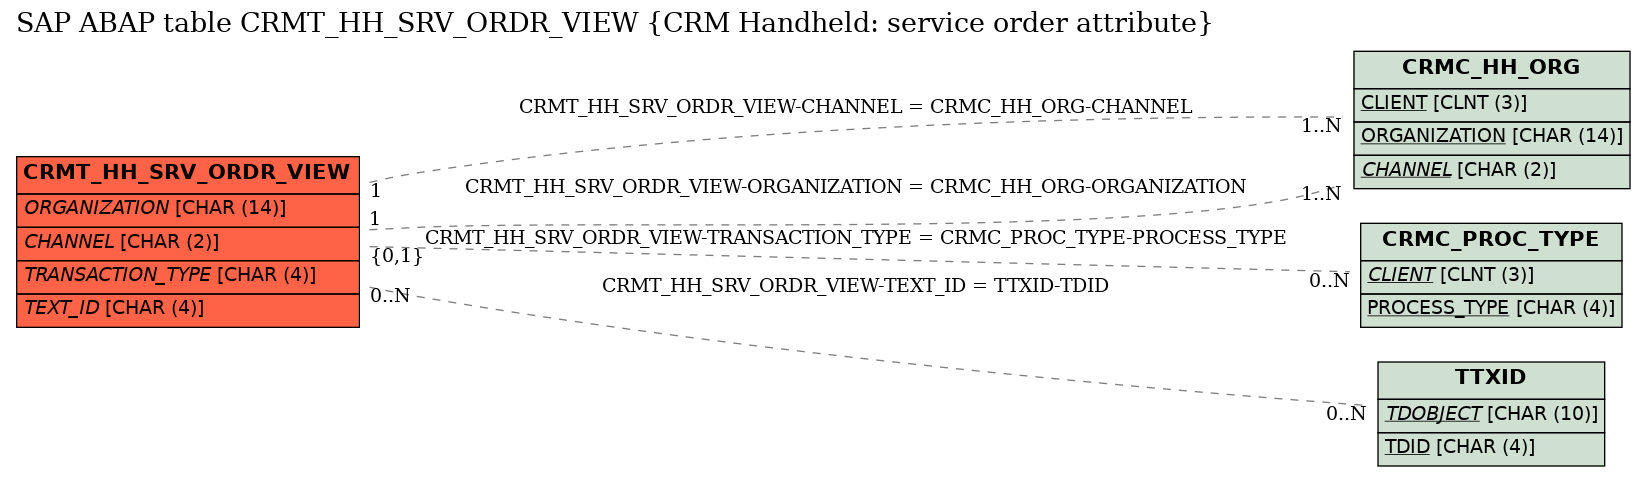 E-R Diagram for table CRMT_HH_SRV_ORDR_VIEW (CRM Handheld: service order attribute)